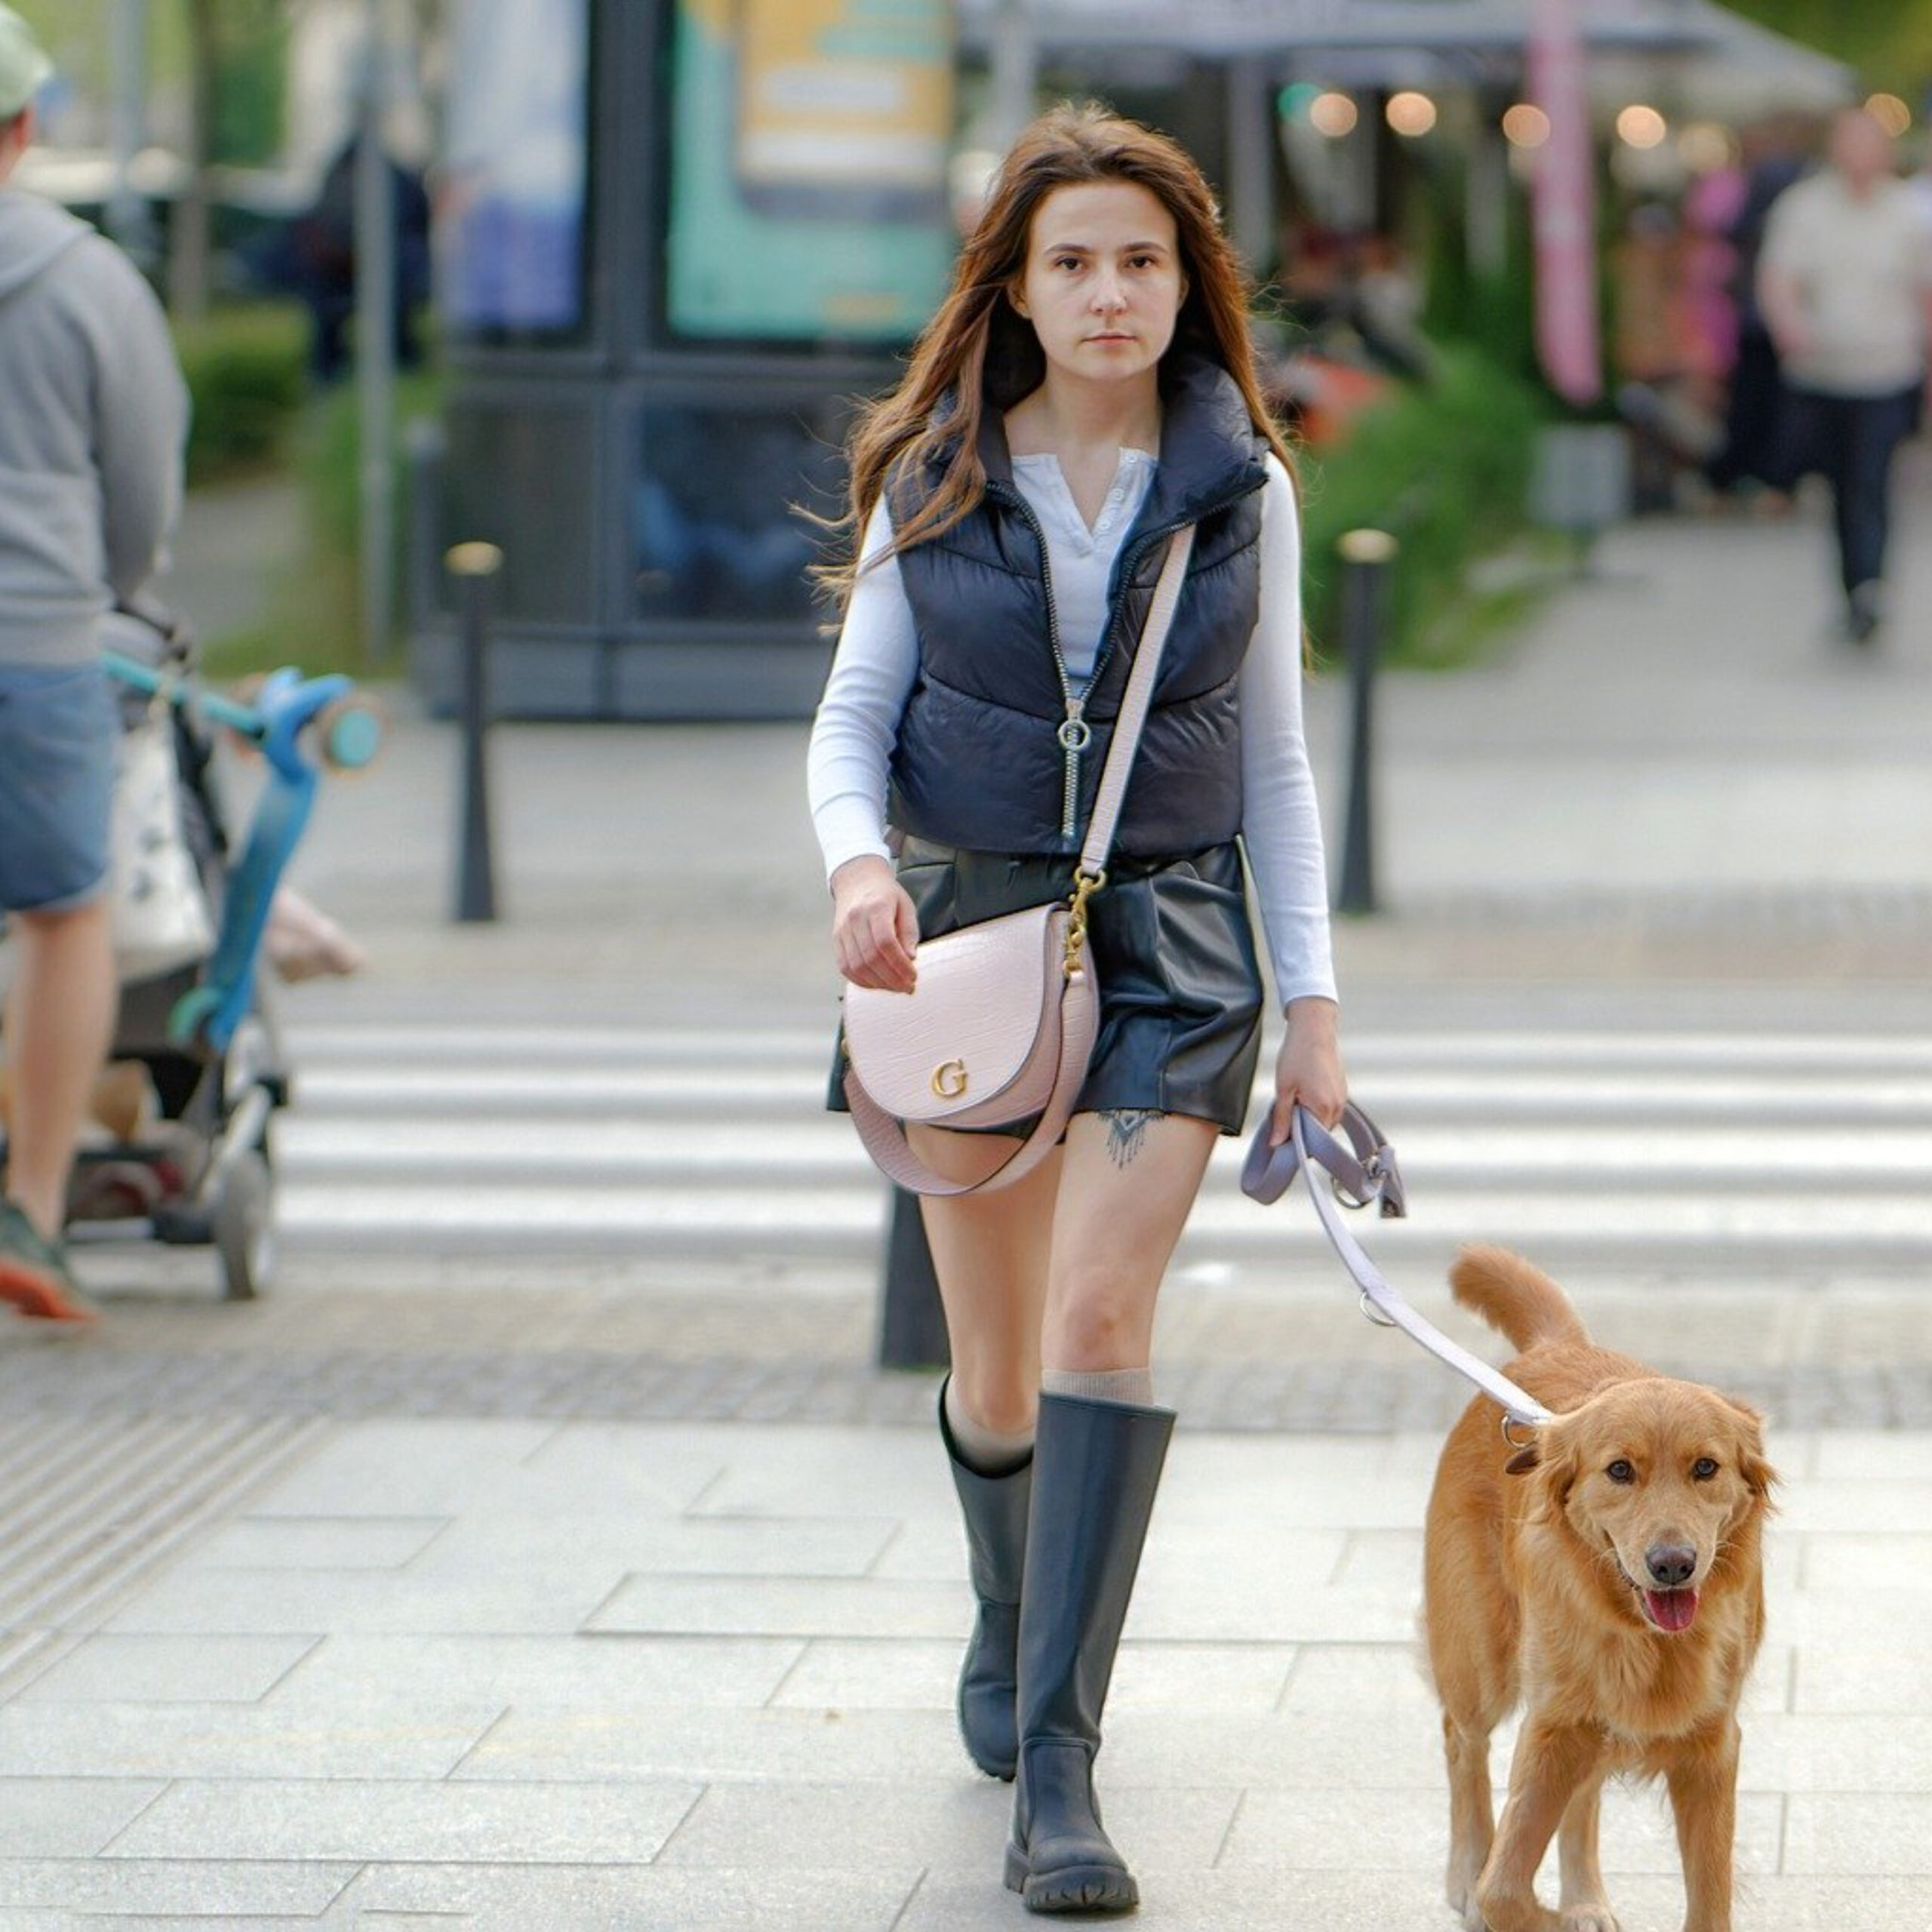 "Effortlessly Mastering Leash Training: Your Key to Joyful Walks with Your Dog"